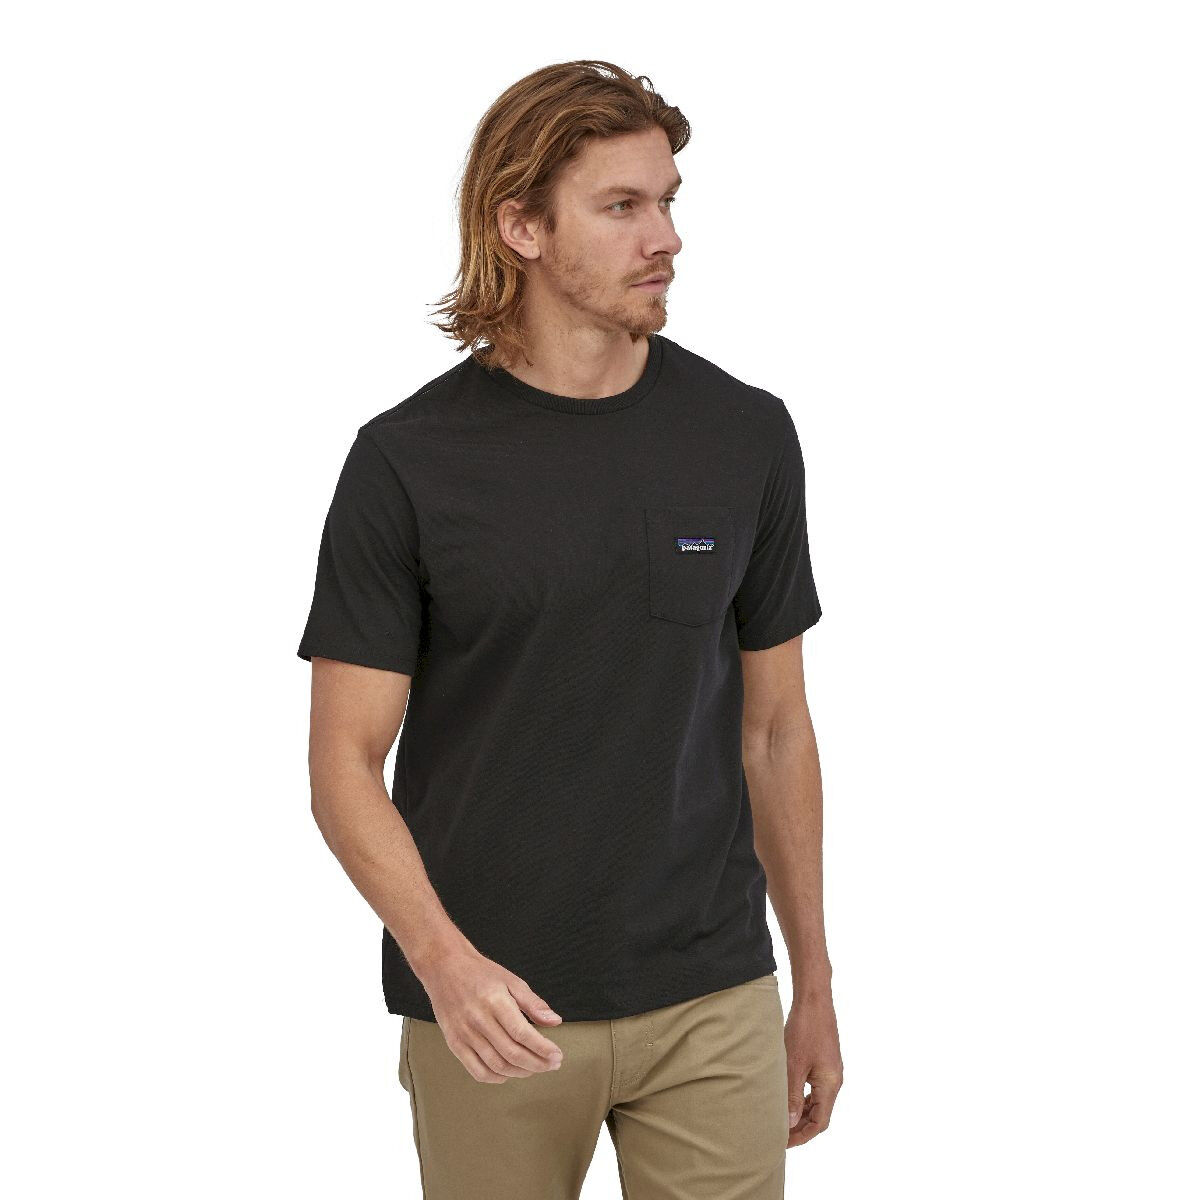 Patagonia P-6 Label Pocket Responsibili-Tee - T-shirt - Men's